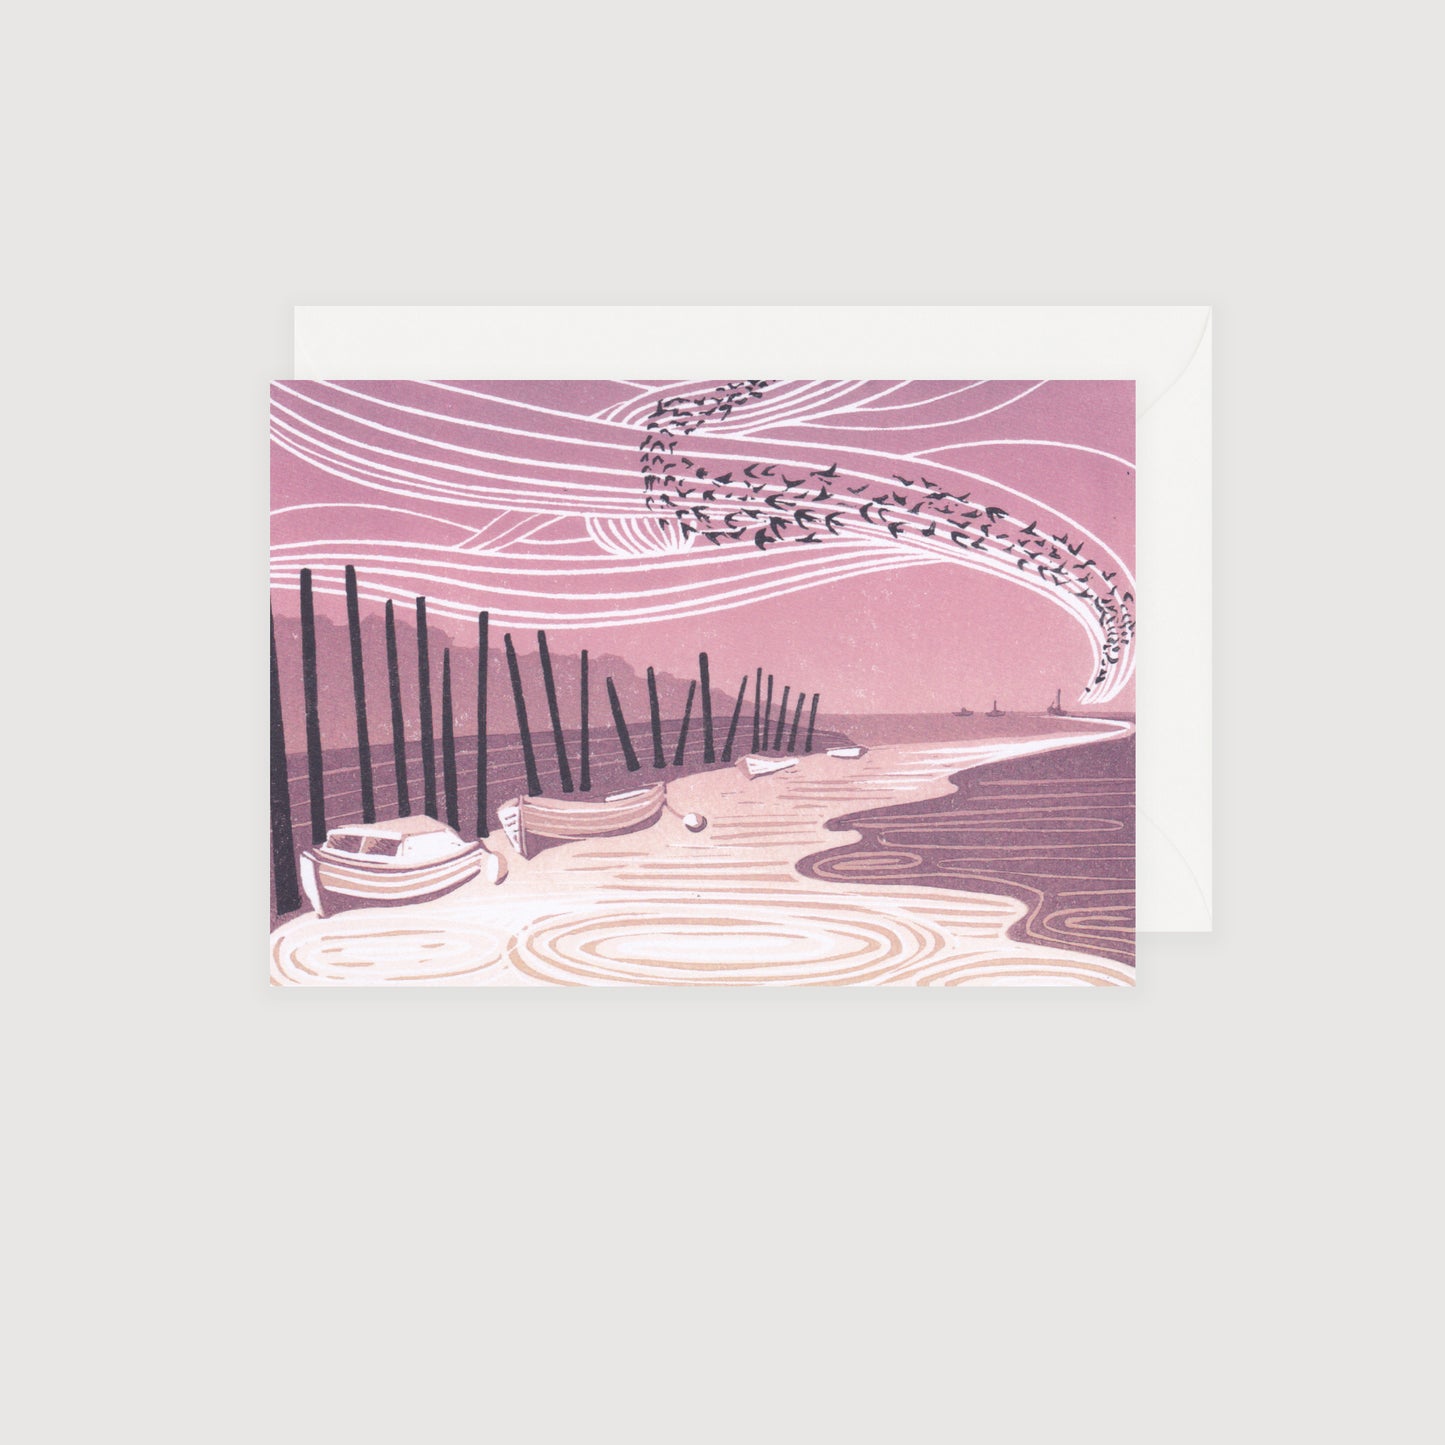 Winter Sunset, Blakeney - Greetings Card | Lino Print reproduction | Norfolk Landscape | Notecard